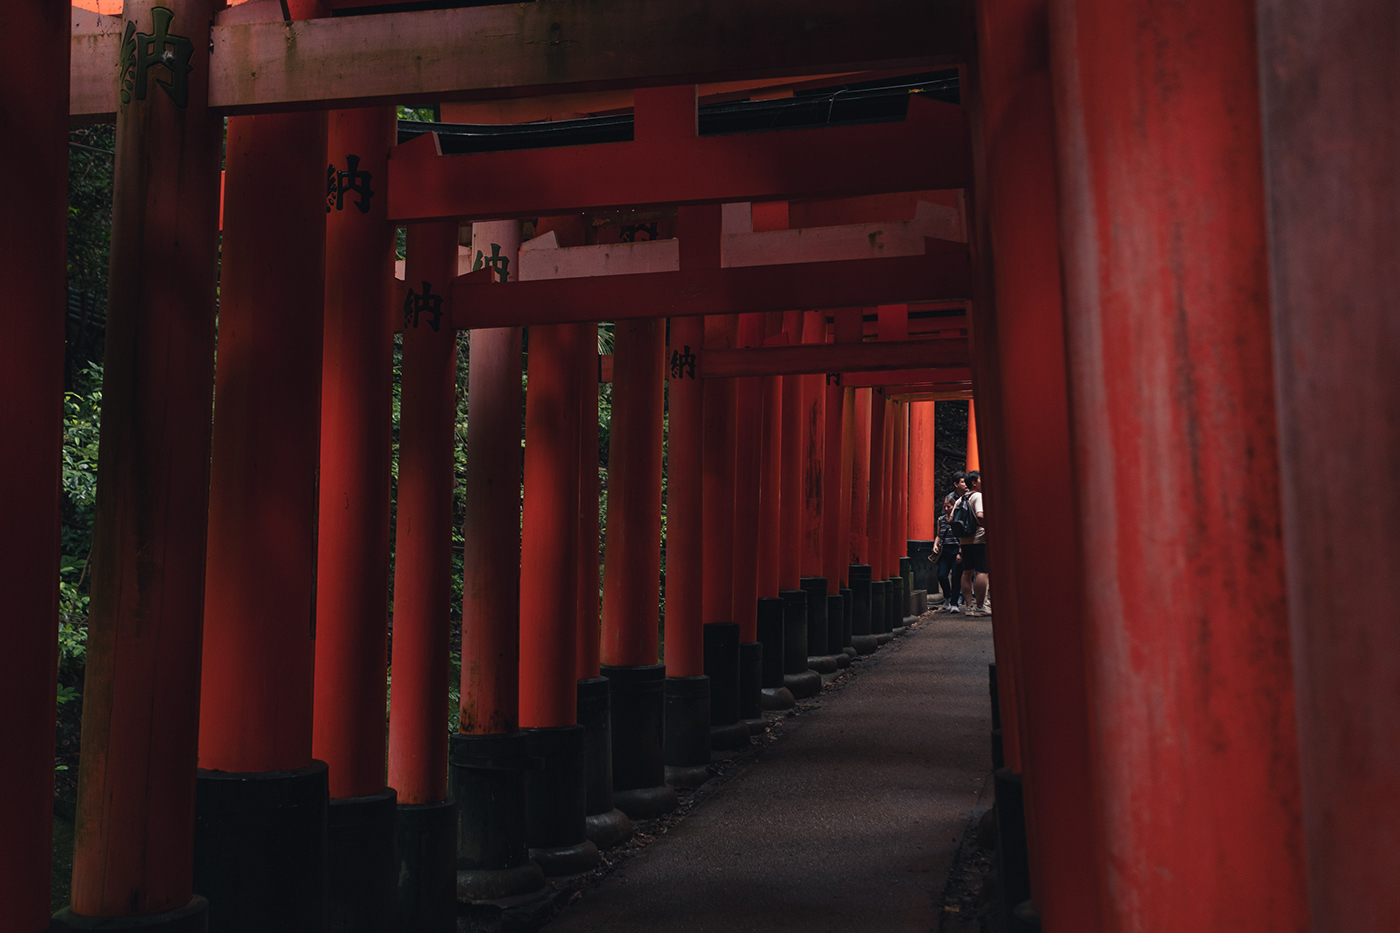 japan architecture Travel kyoto fujifilm lightroom Photography  Nature temple Nara